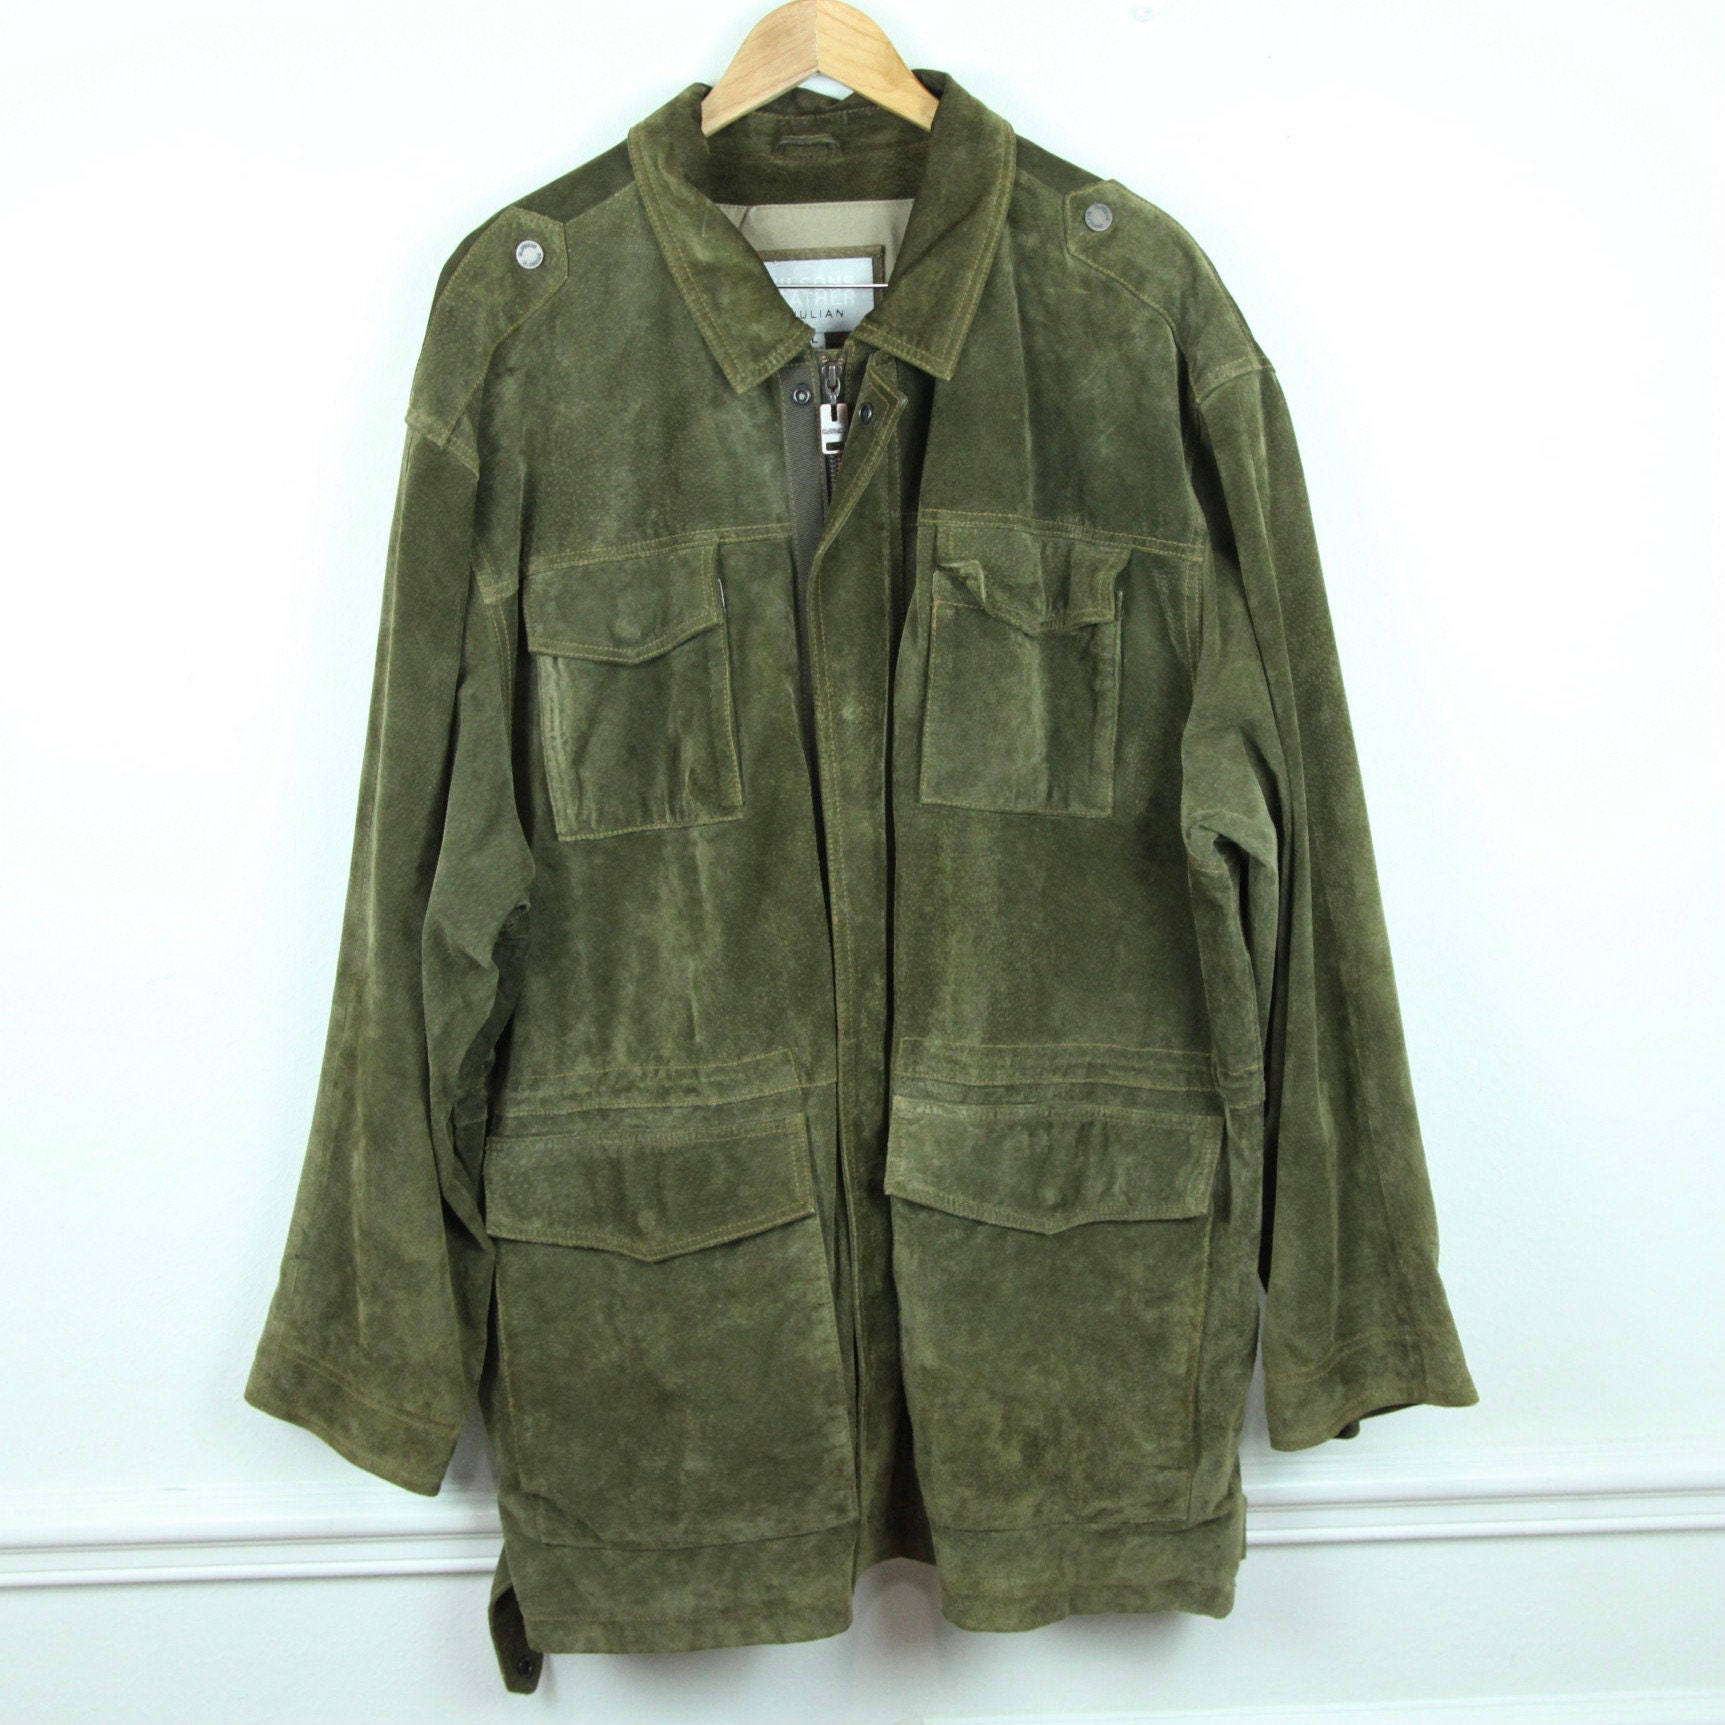 Wilsons Leather, Jackets & Coats, Che Guevara Leather Jacket